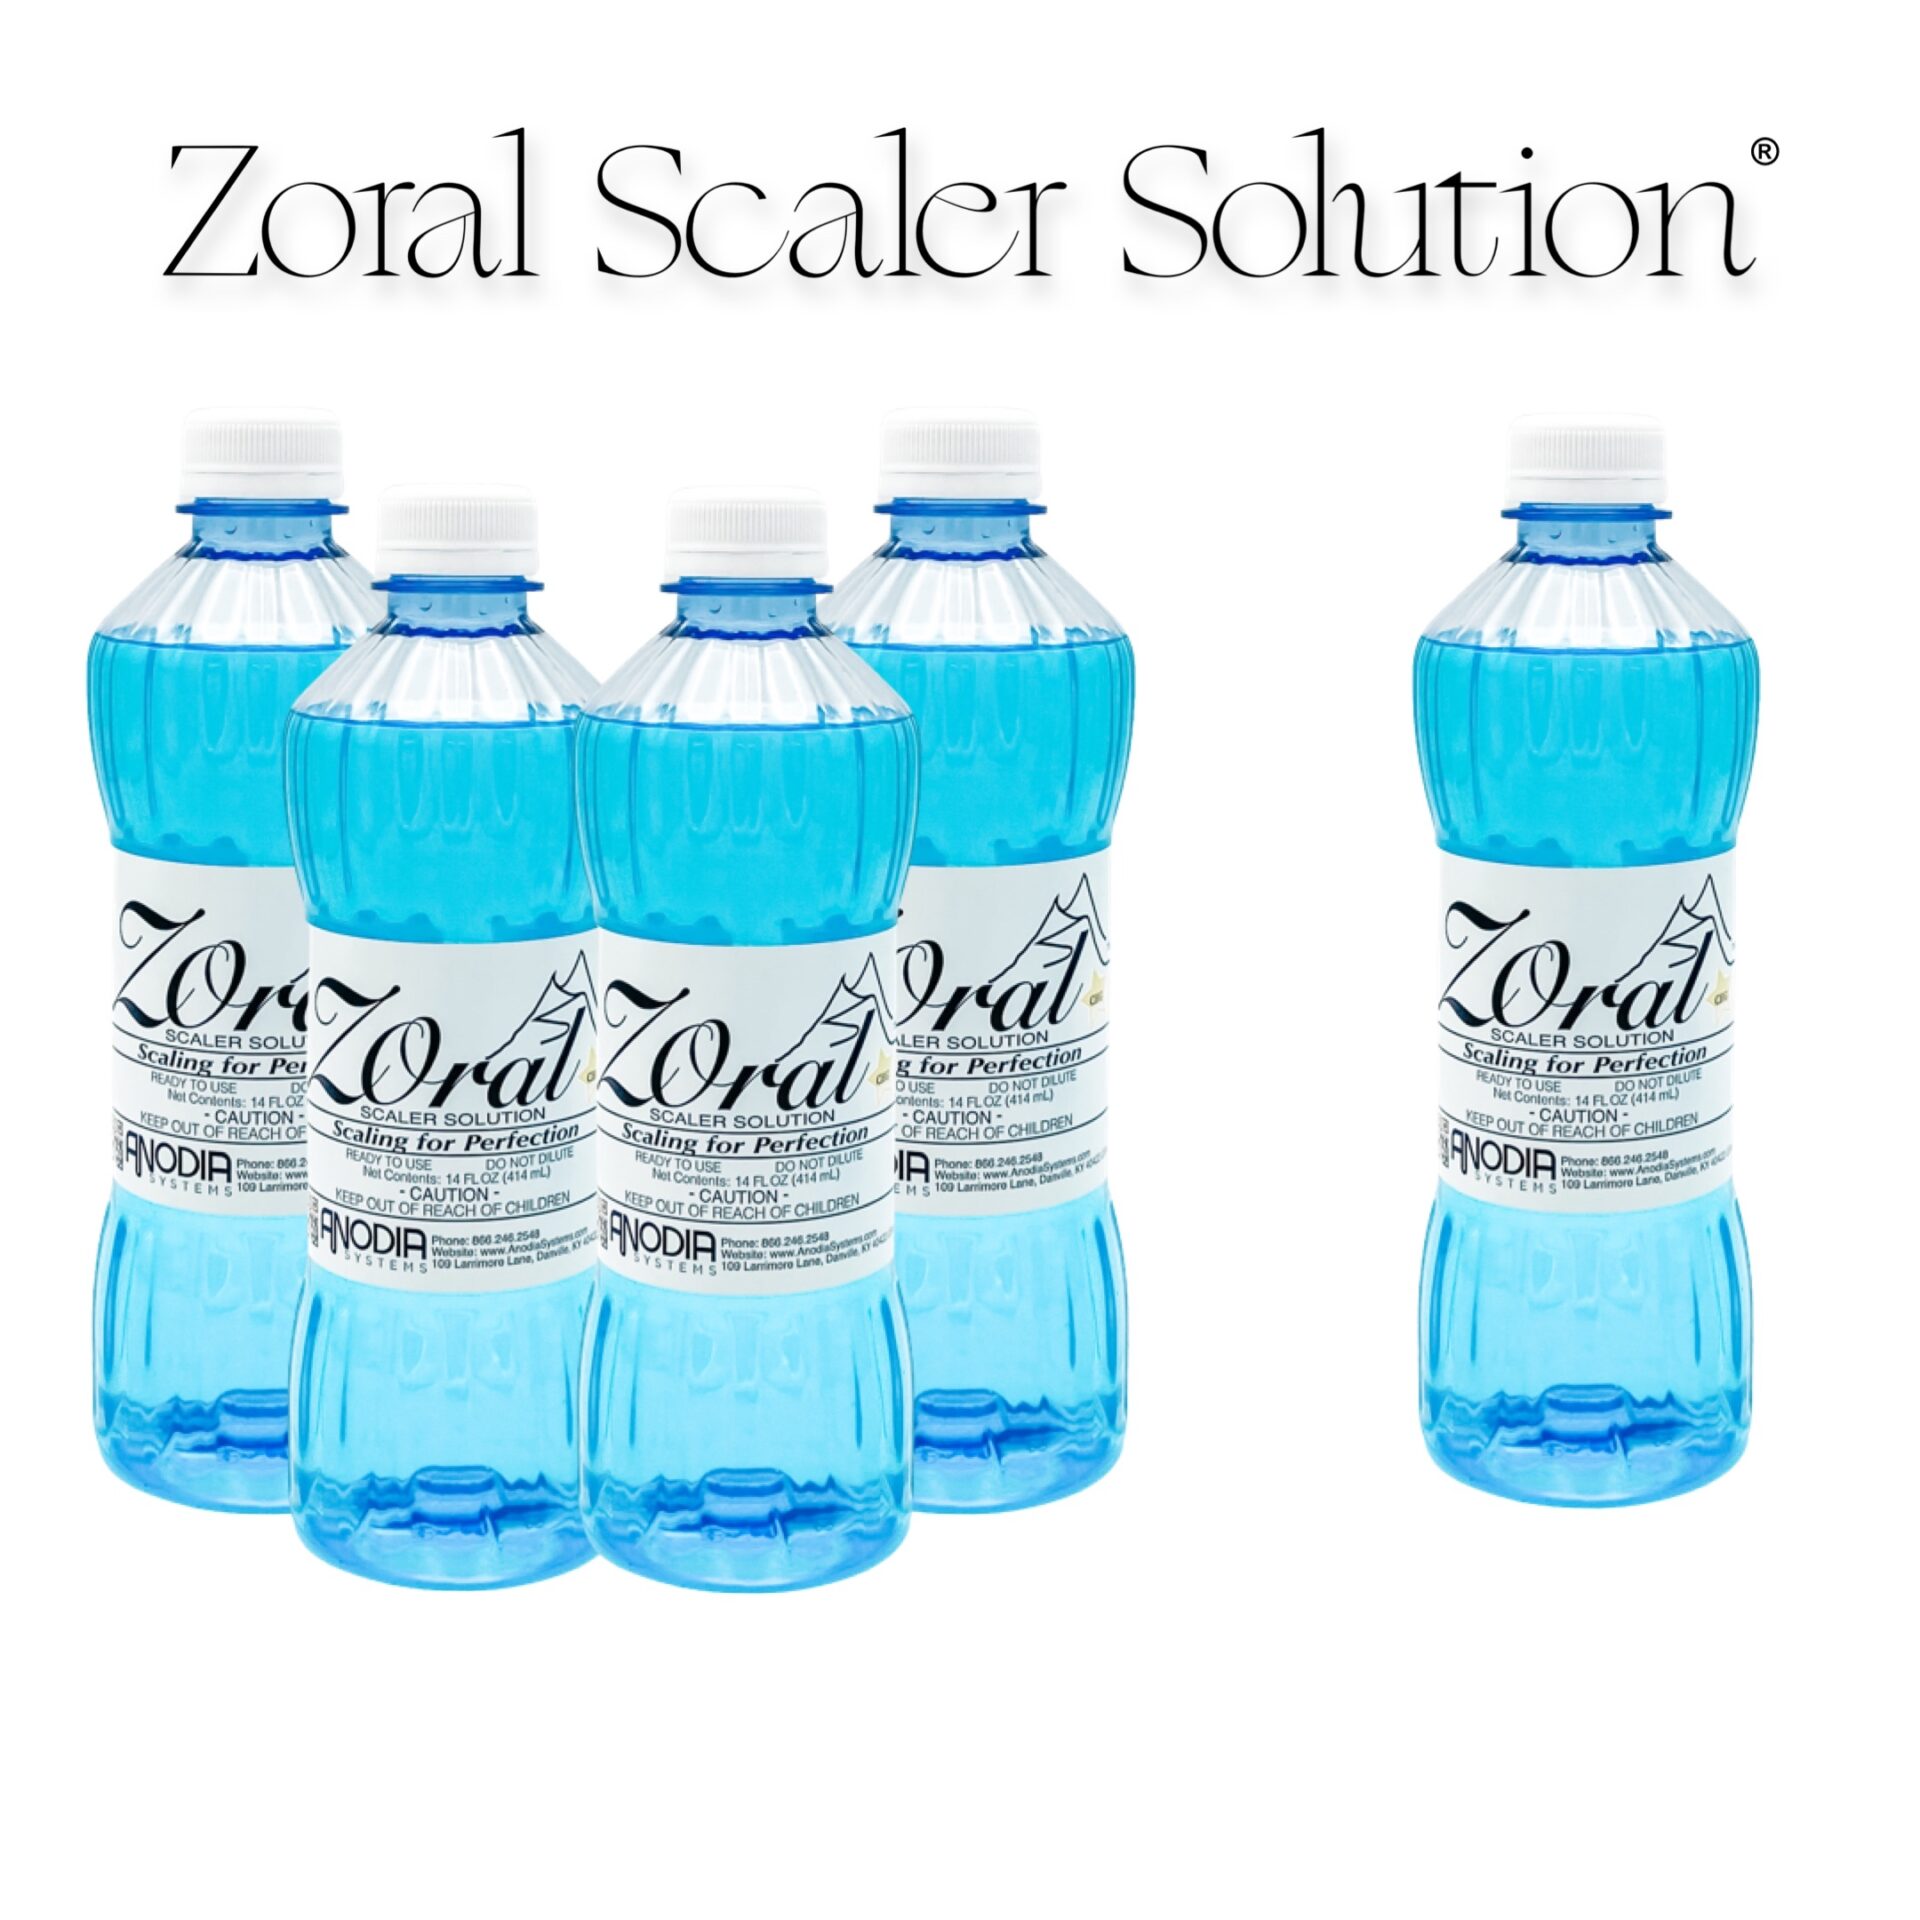 BottleX® Dental Water Bottle Cleaner - Anodia Systems